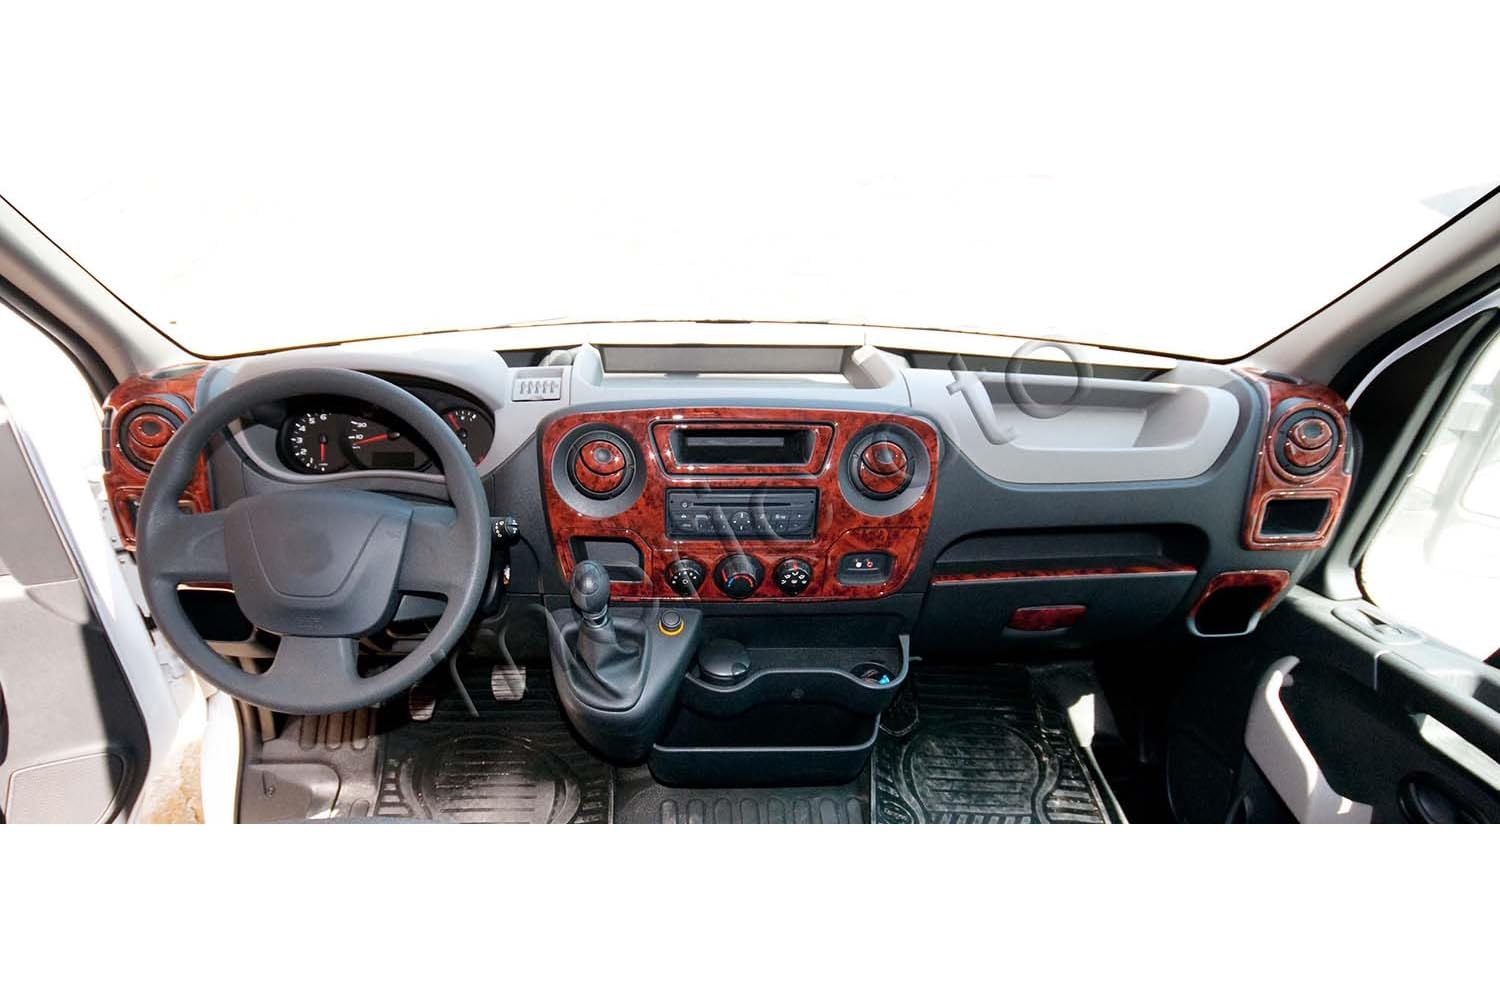 AUTOKLEIDUNG® Cockpit Dekor kompatibel mit Renault Master ab Baujahr 01/2010 23 Teile | 3D Wurzelholz Optik von Autokleidung